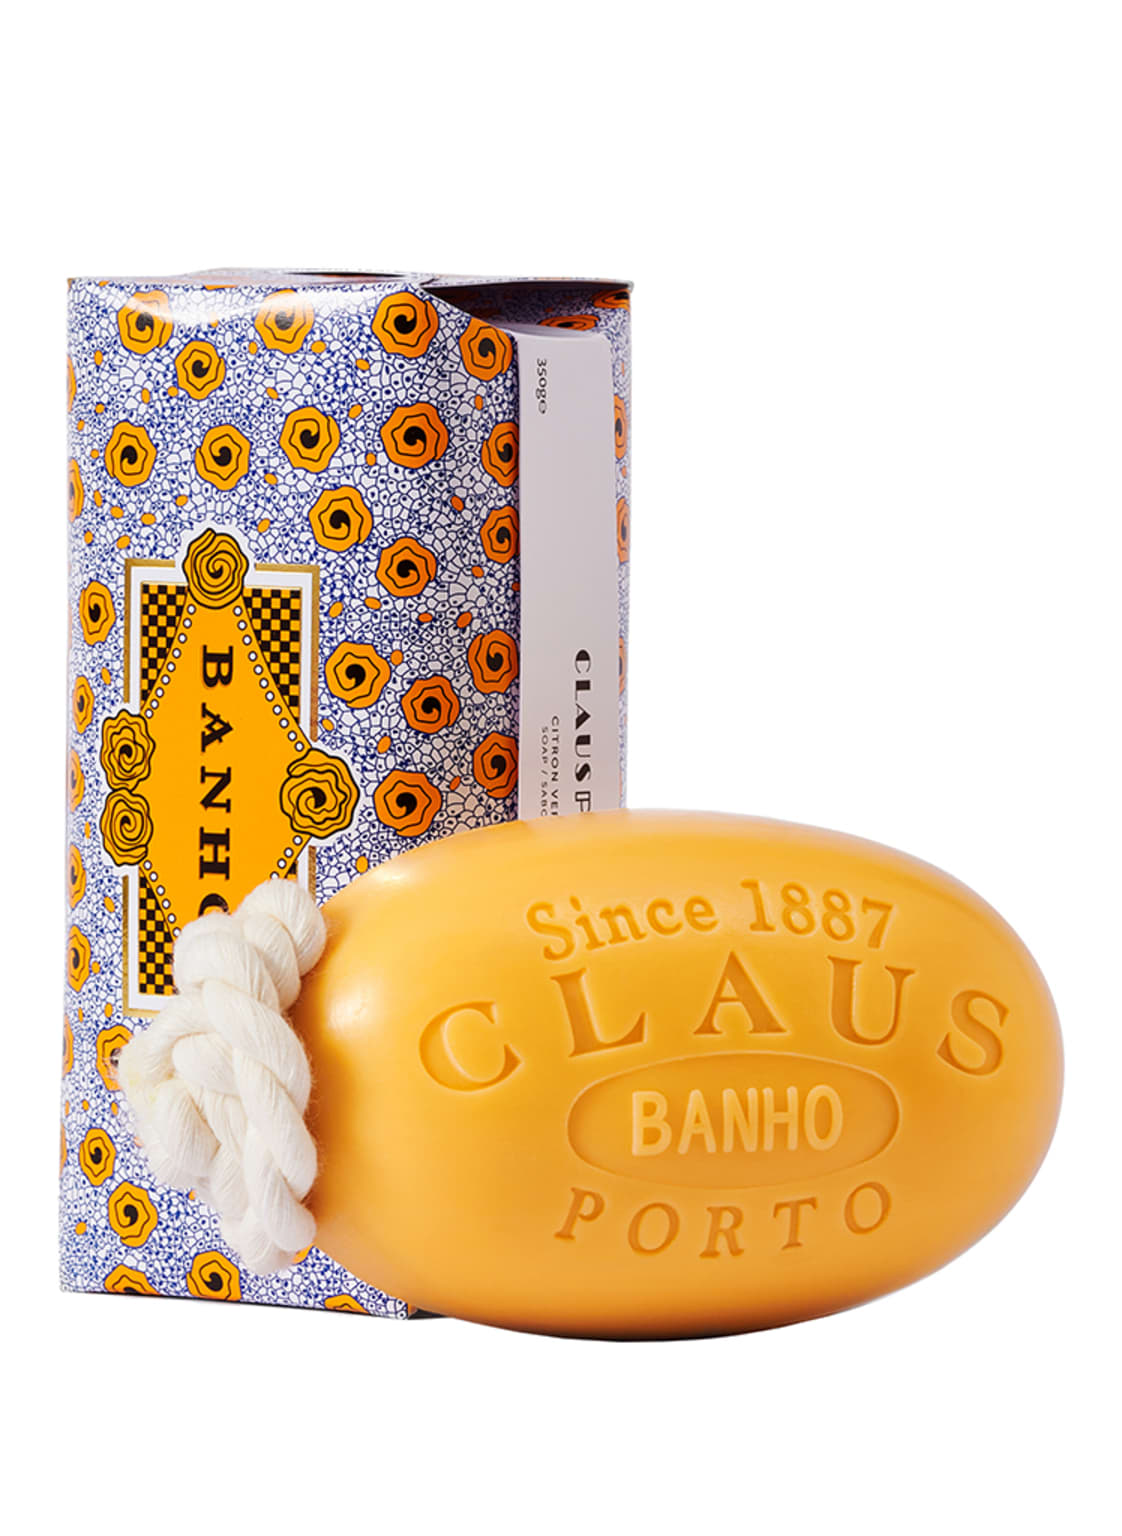 Claus Porto Banho Soap On A Roap Seife 350 g von CLAUS PORTO